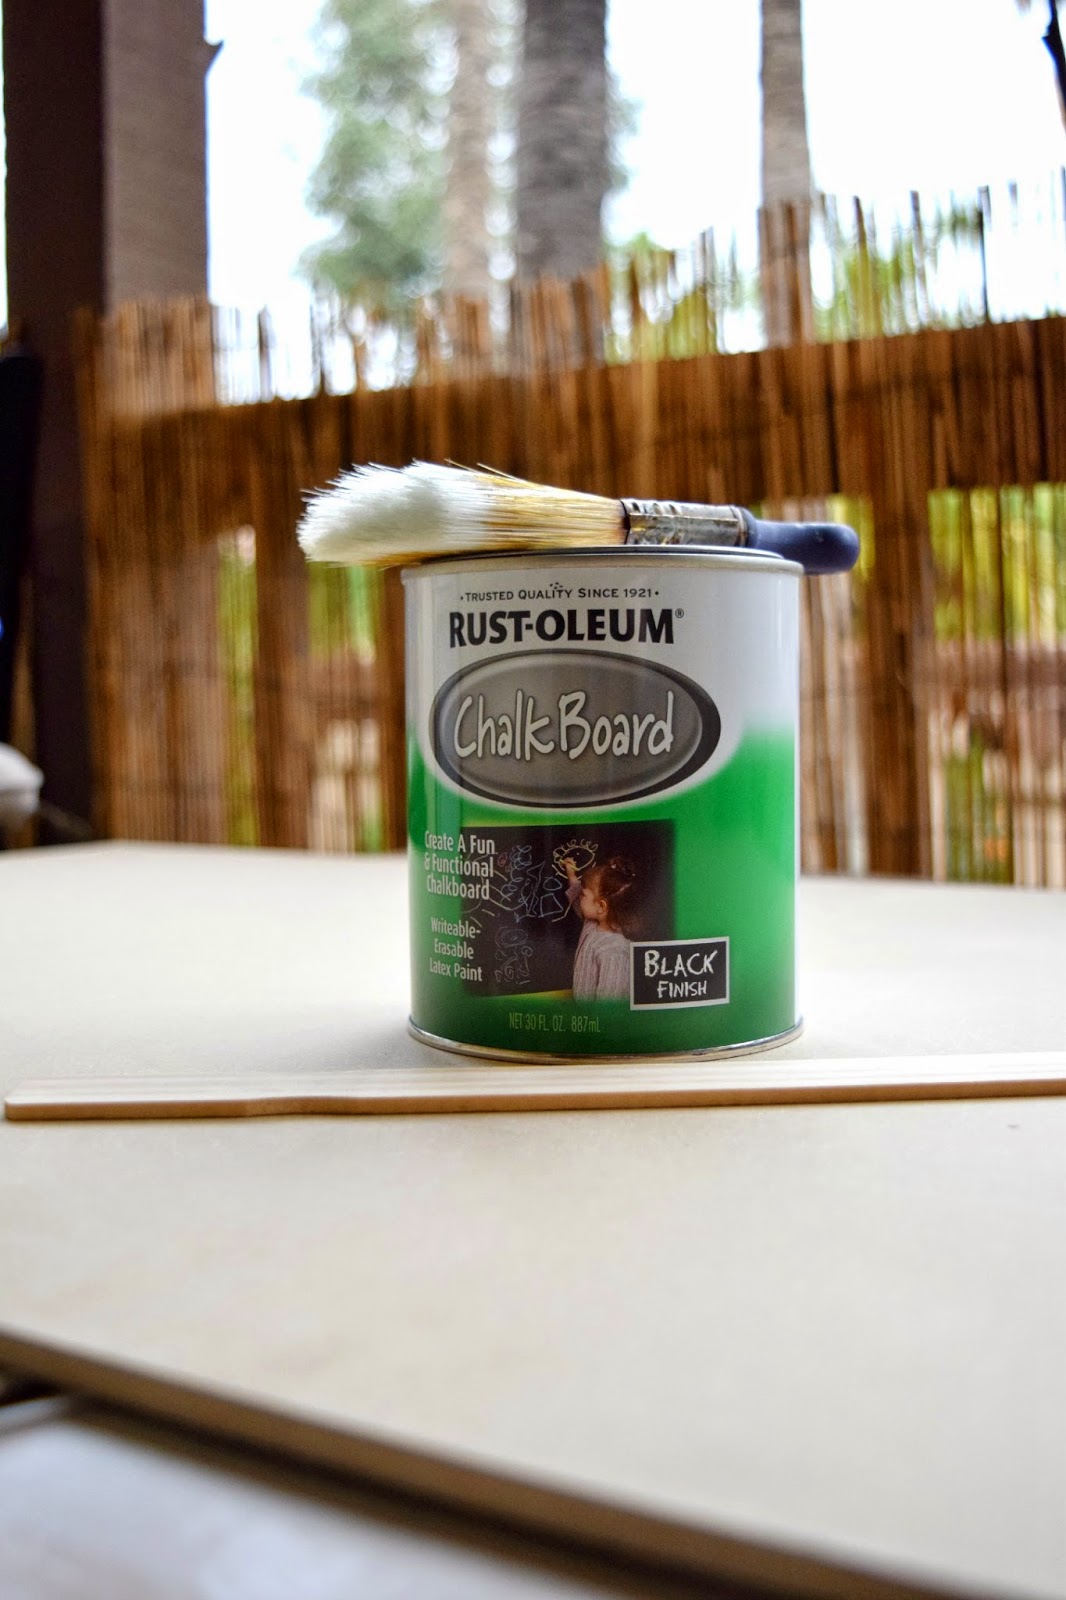 Rust-Oleum Chalkboard Paint